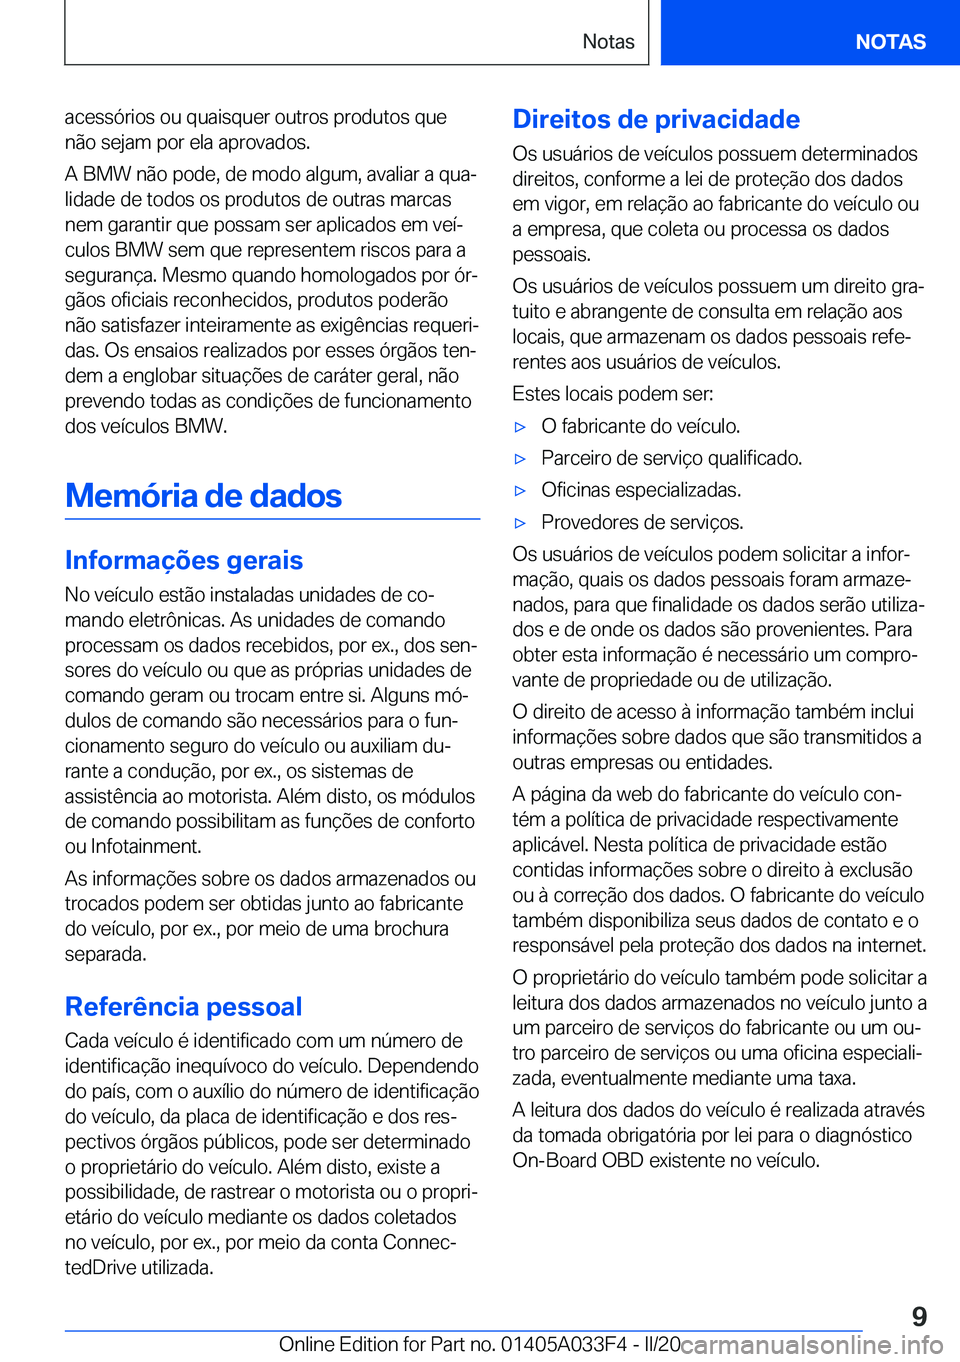 BMW X5 M 2020  Manual do condutor (in Portuguese) �a�c�e�s�s�ó�r�i�o�s��o�u��q�u�a�i�s�q�u�e�r��o�u�t�r�o�s��p�r�o�d�u�t�o�s��q�u�e
�n�ã�o��s�e�j�a�m��p�o�r��e�l�a��a�p�r�o�v�a�d�o�s�.
�A��B�M�W��n�ã�o��p�o�d�e�,��d�e��m�o�d�o��a�l�